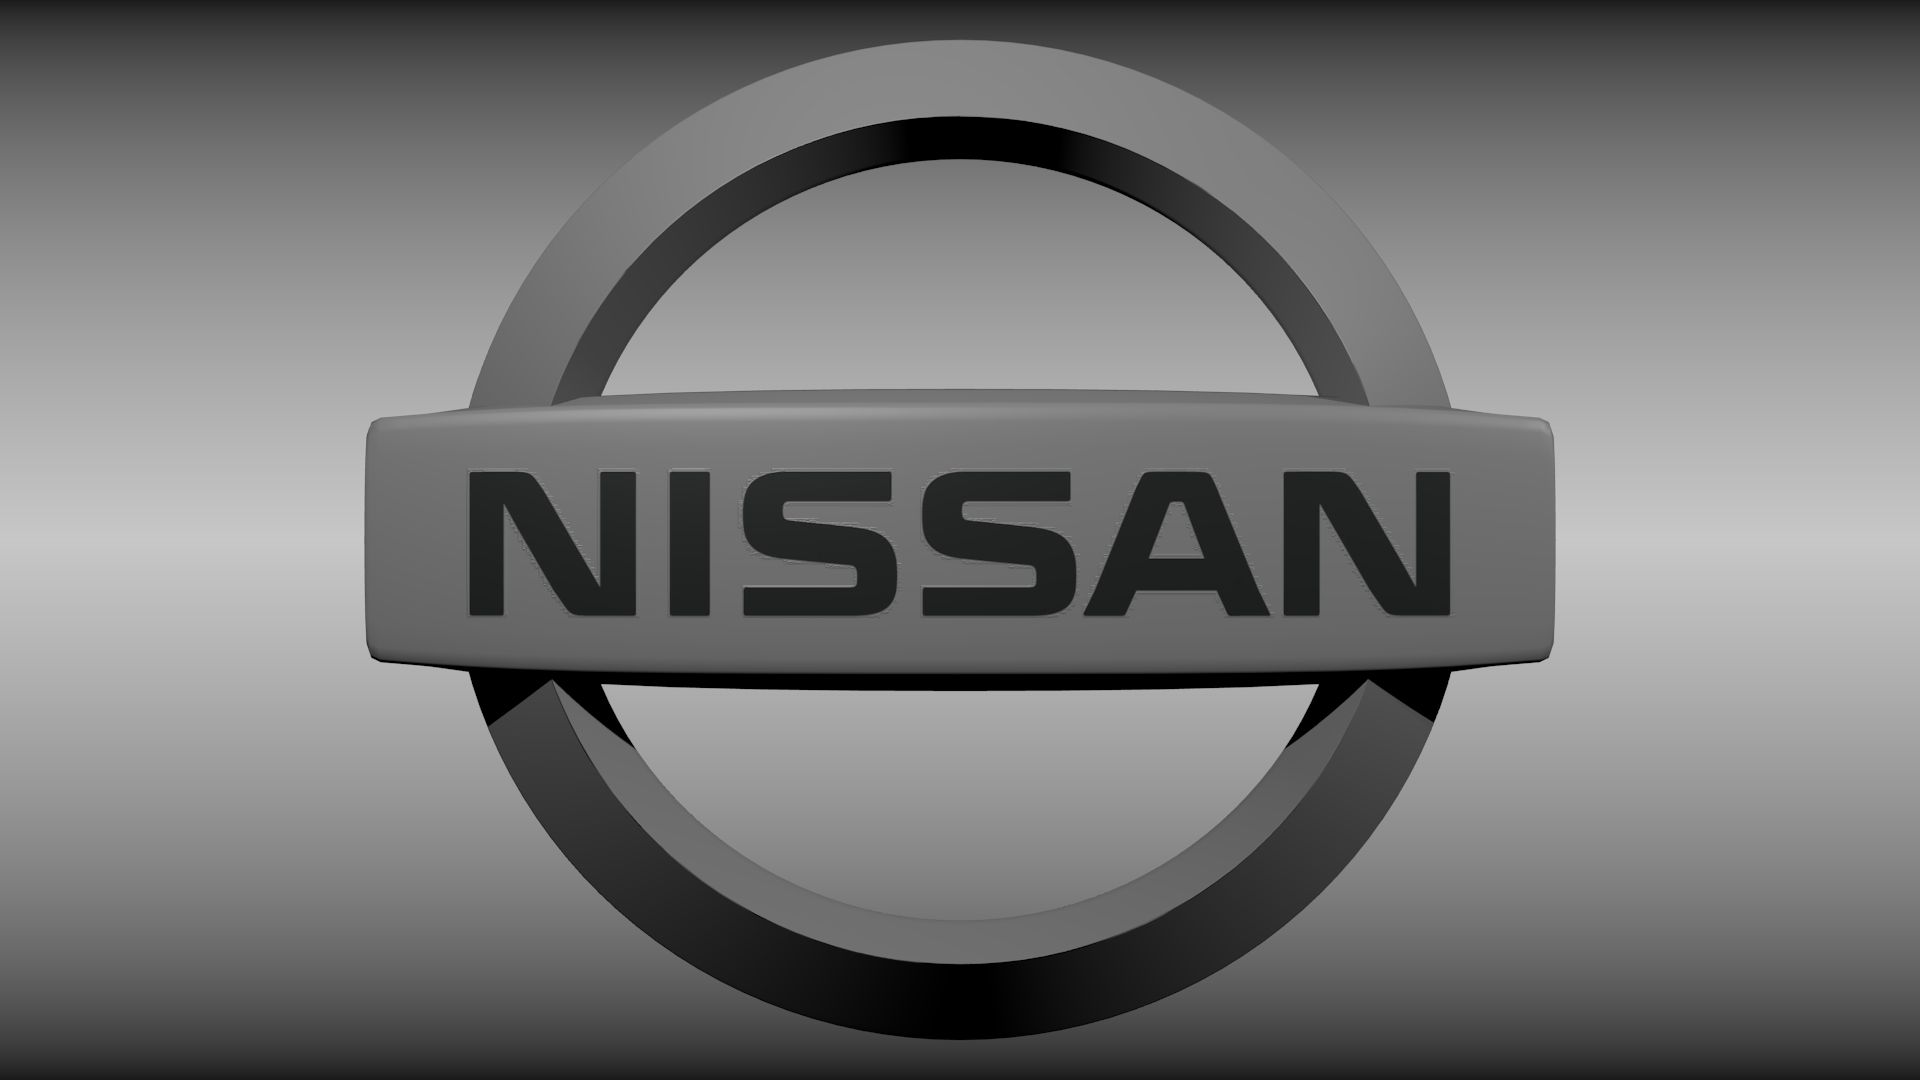 Nissan HD PNG - 116768